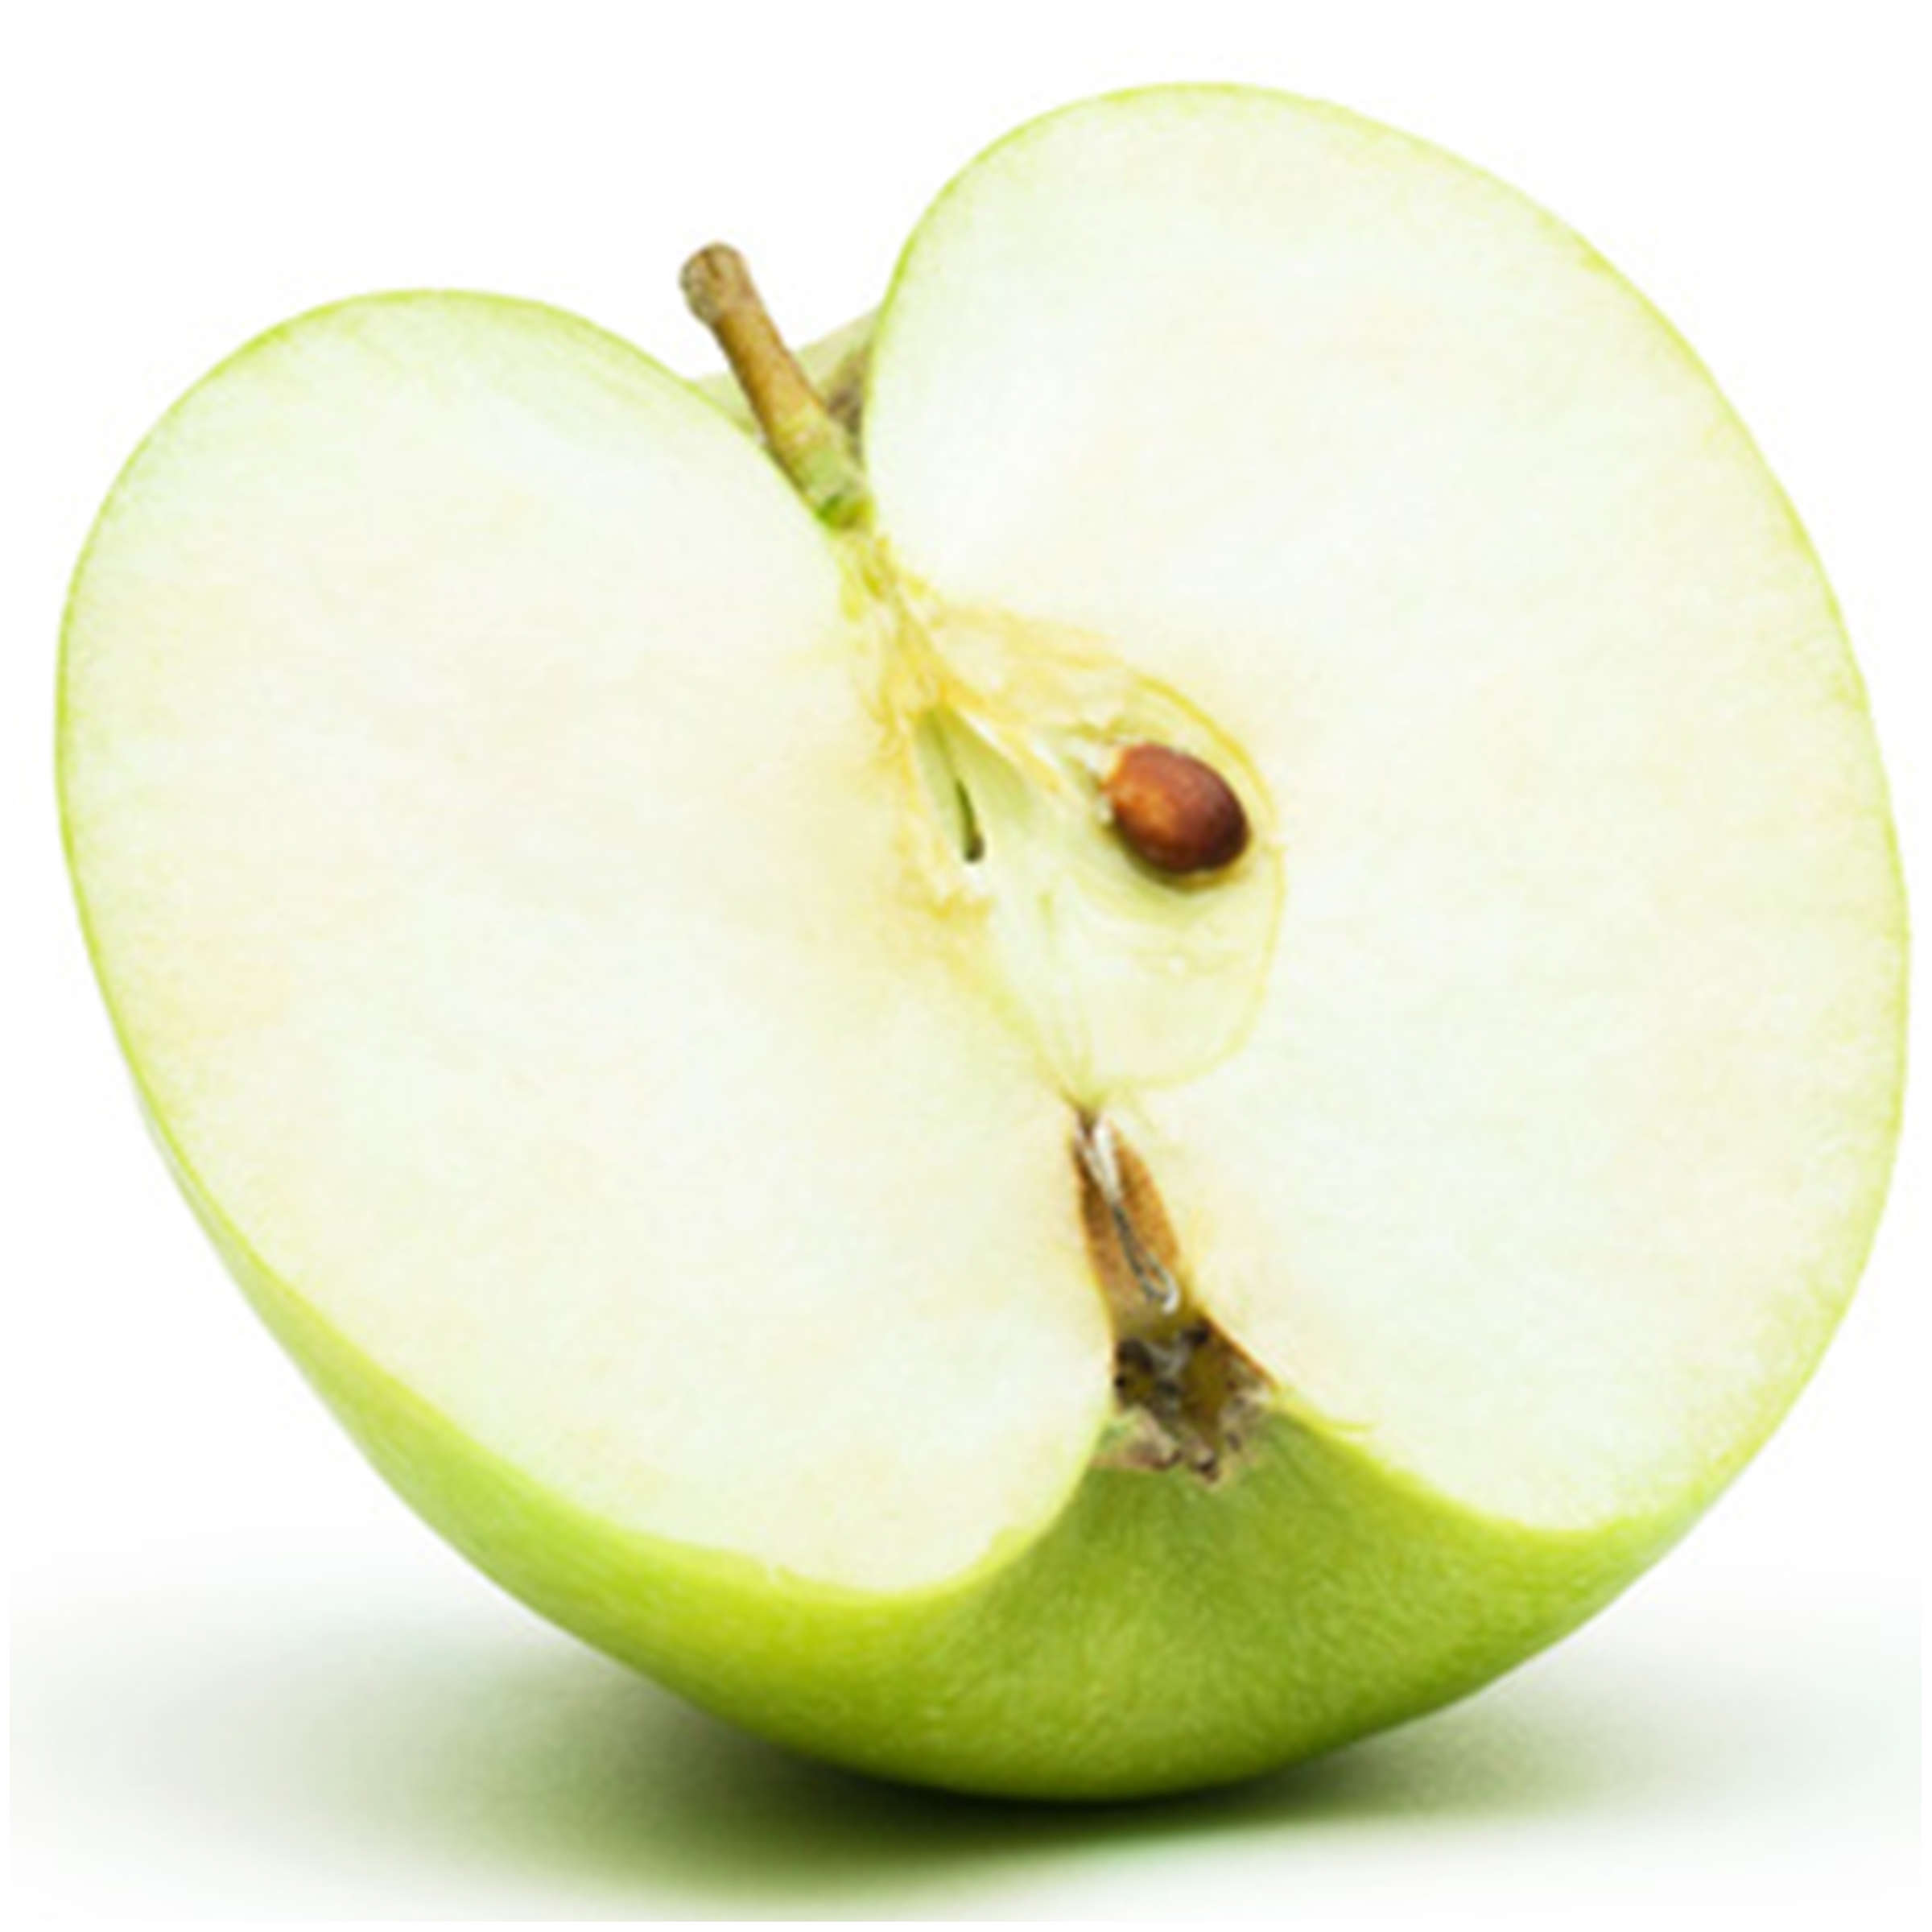 Garnier Whole Blends Shampoo, Green Apple & Green Tea Extracts, 12.5 Fl Oz - image 3 of 11